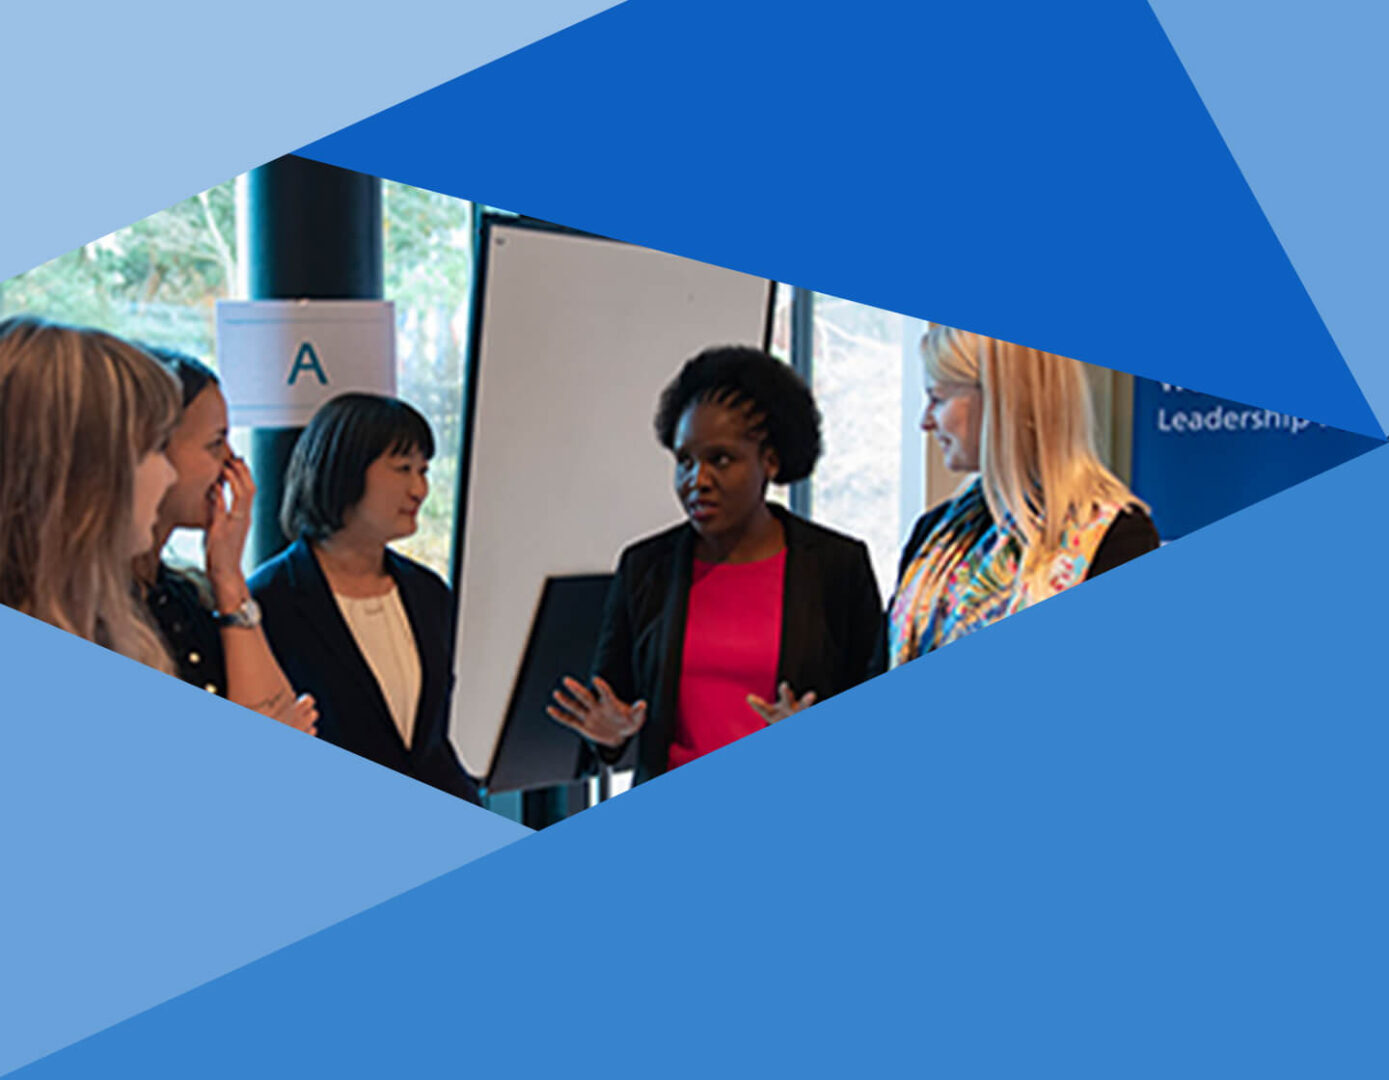 Inspiring week for female leaders - IMD Business School